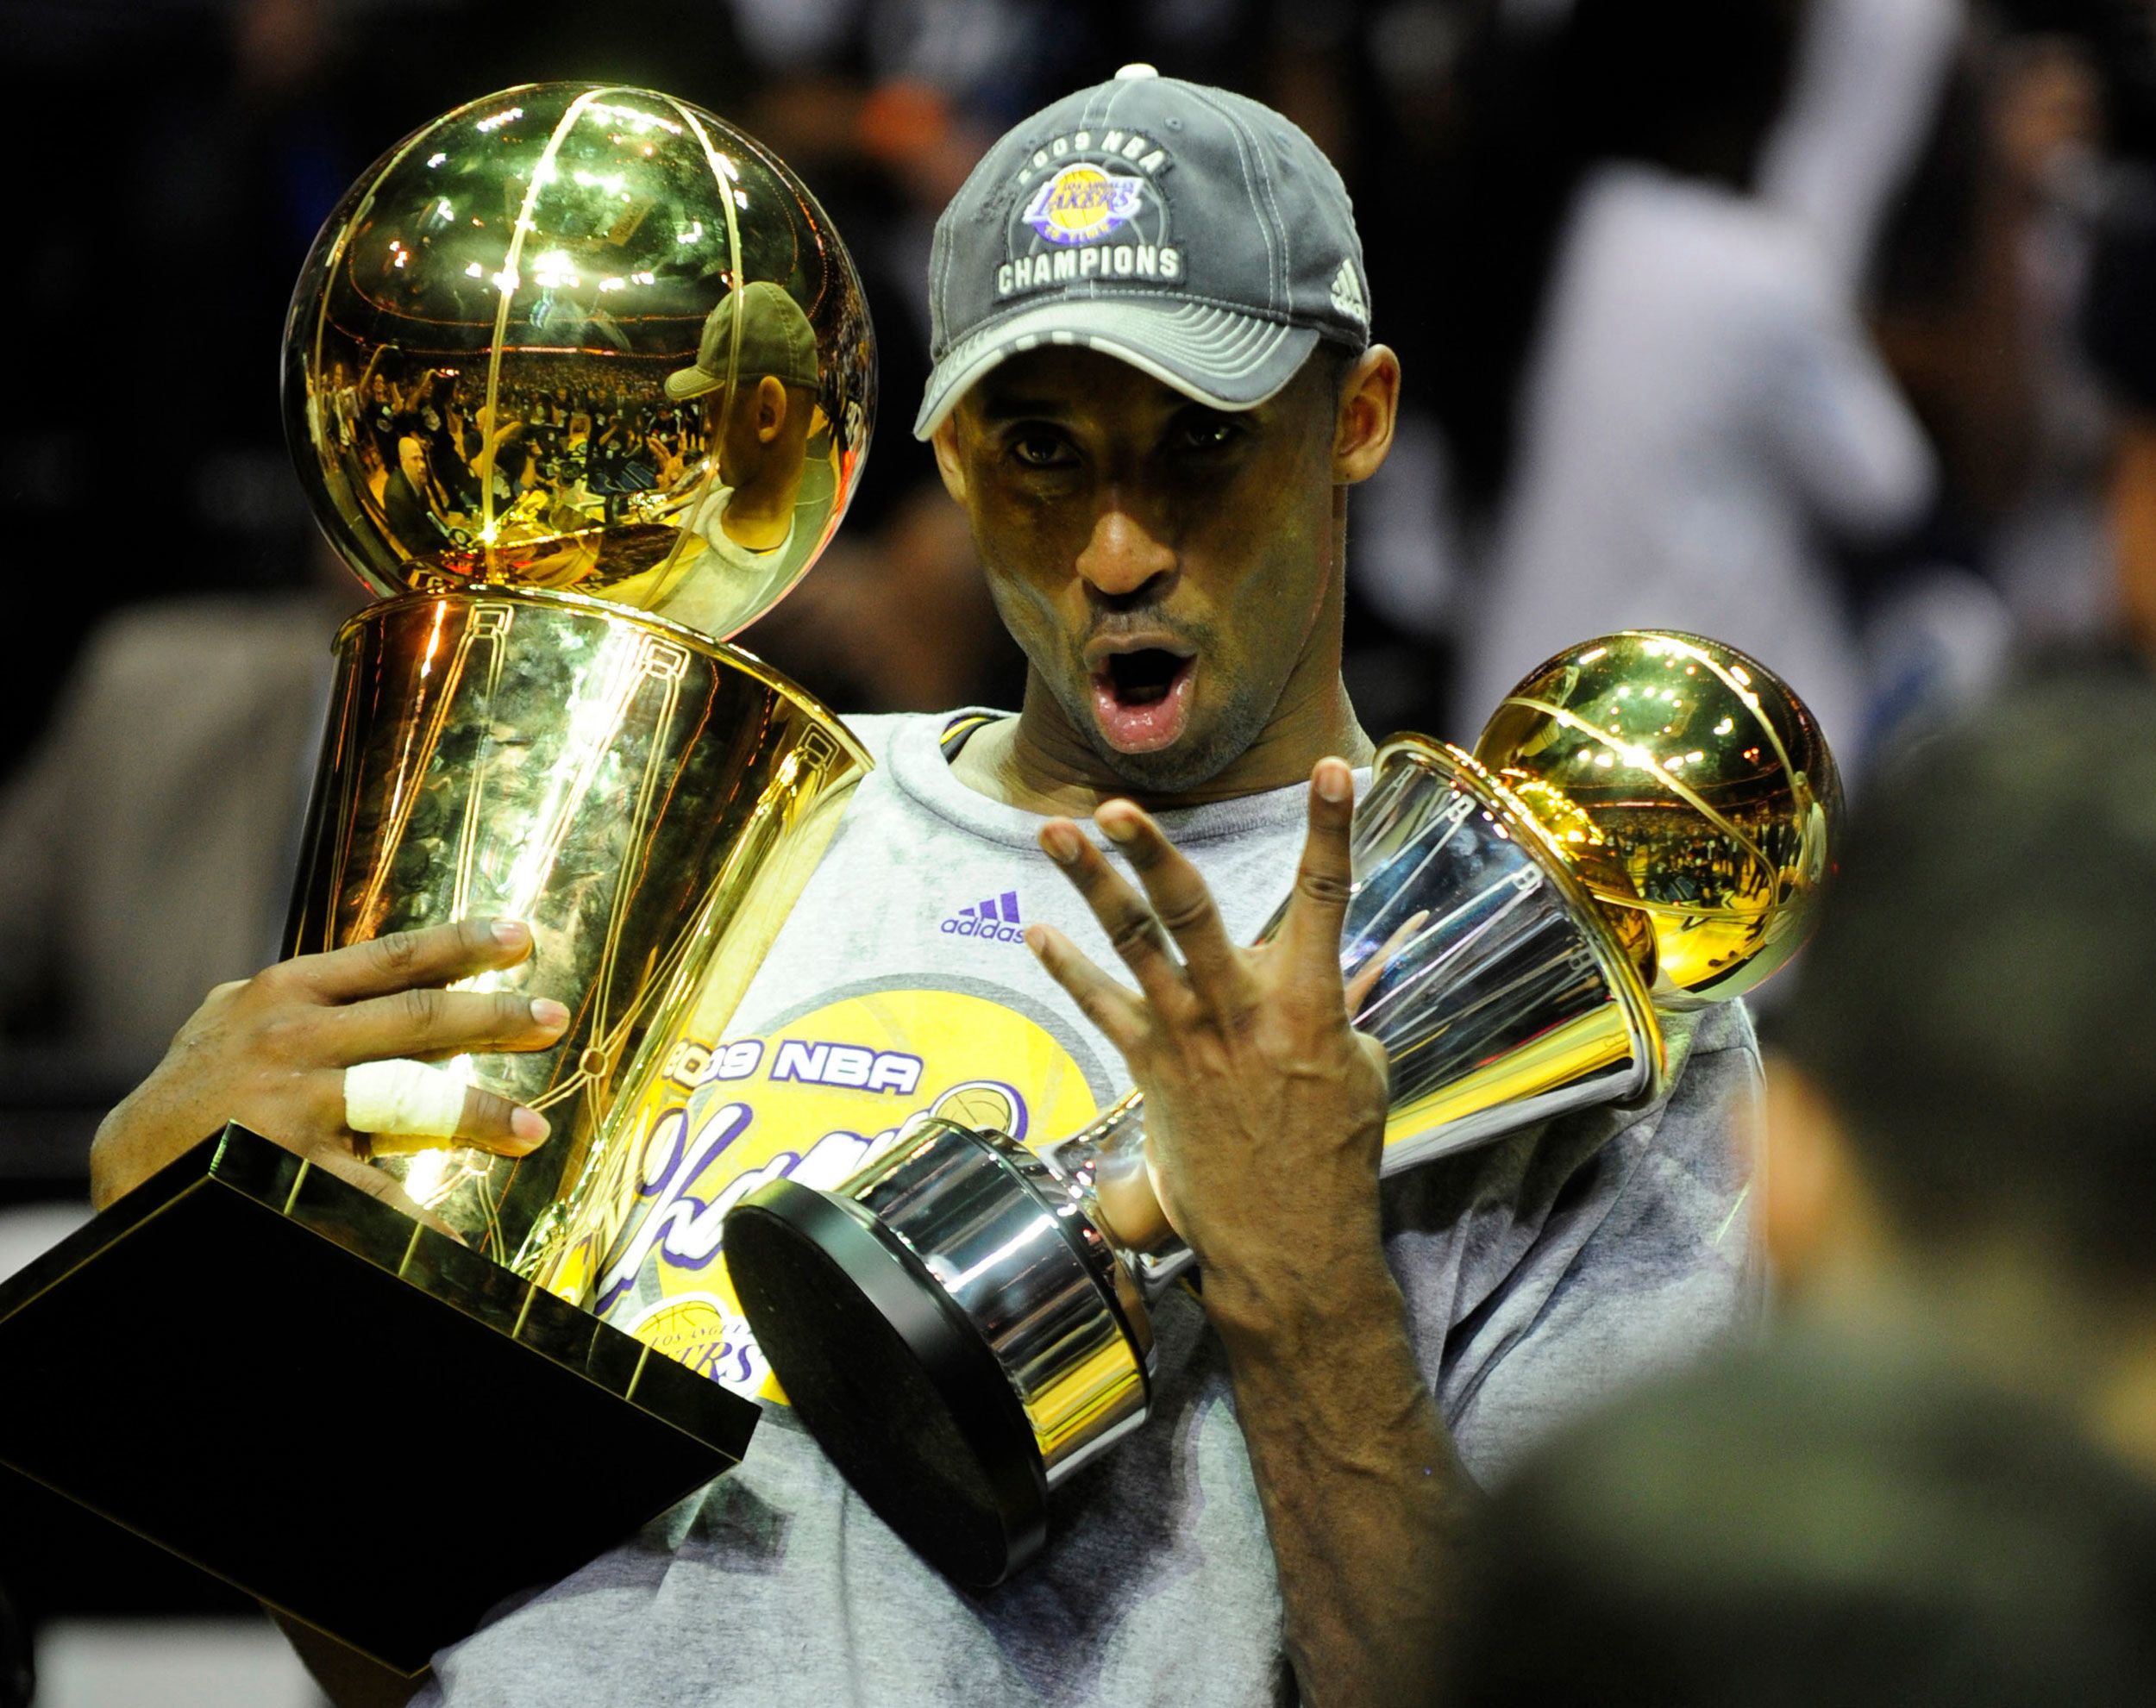 ESPN - A trophy case fit for a legend 🏆 Kobe Bryant turns 41